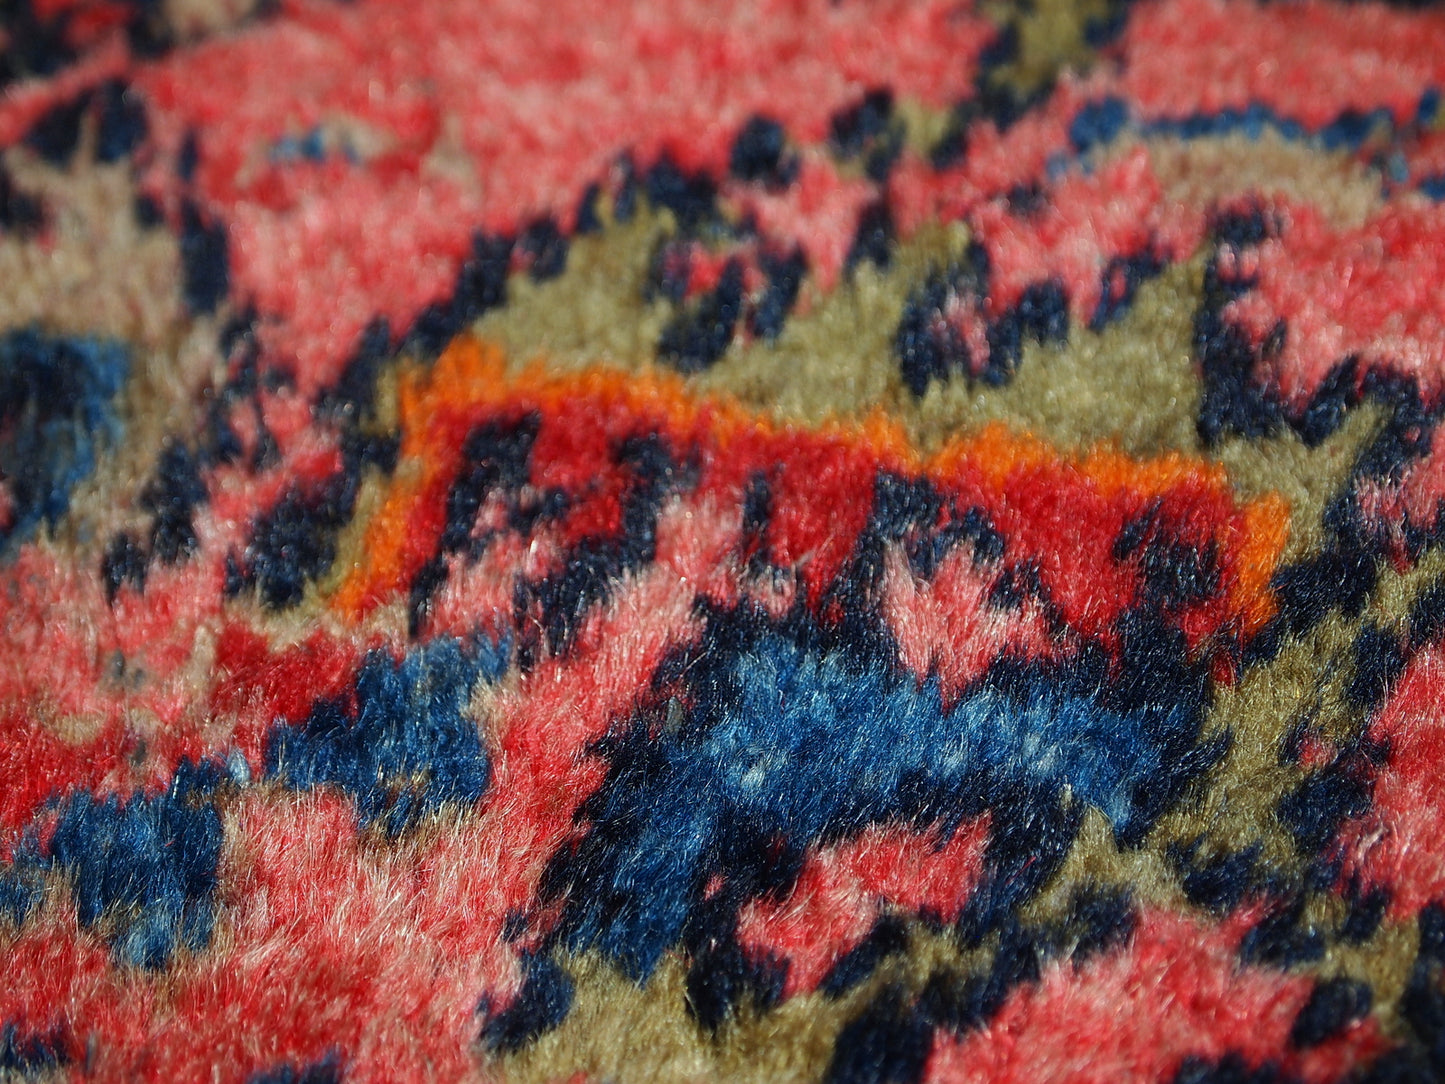 Handmade antique Persian Malayer rug, 1920s